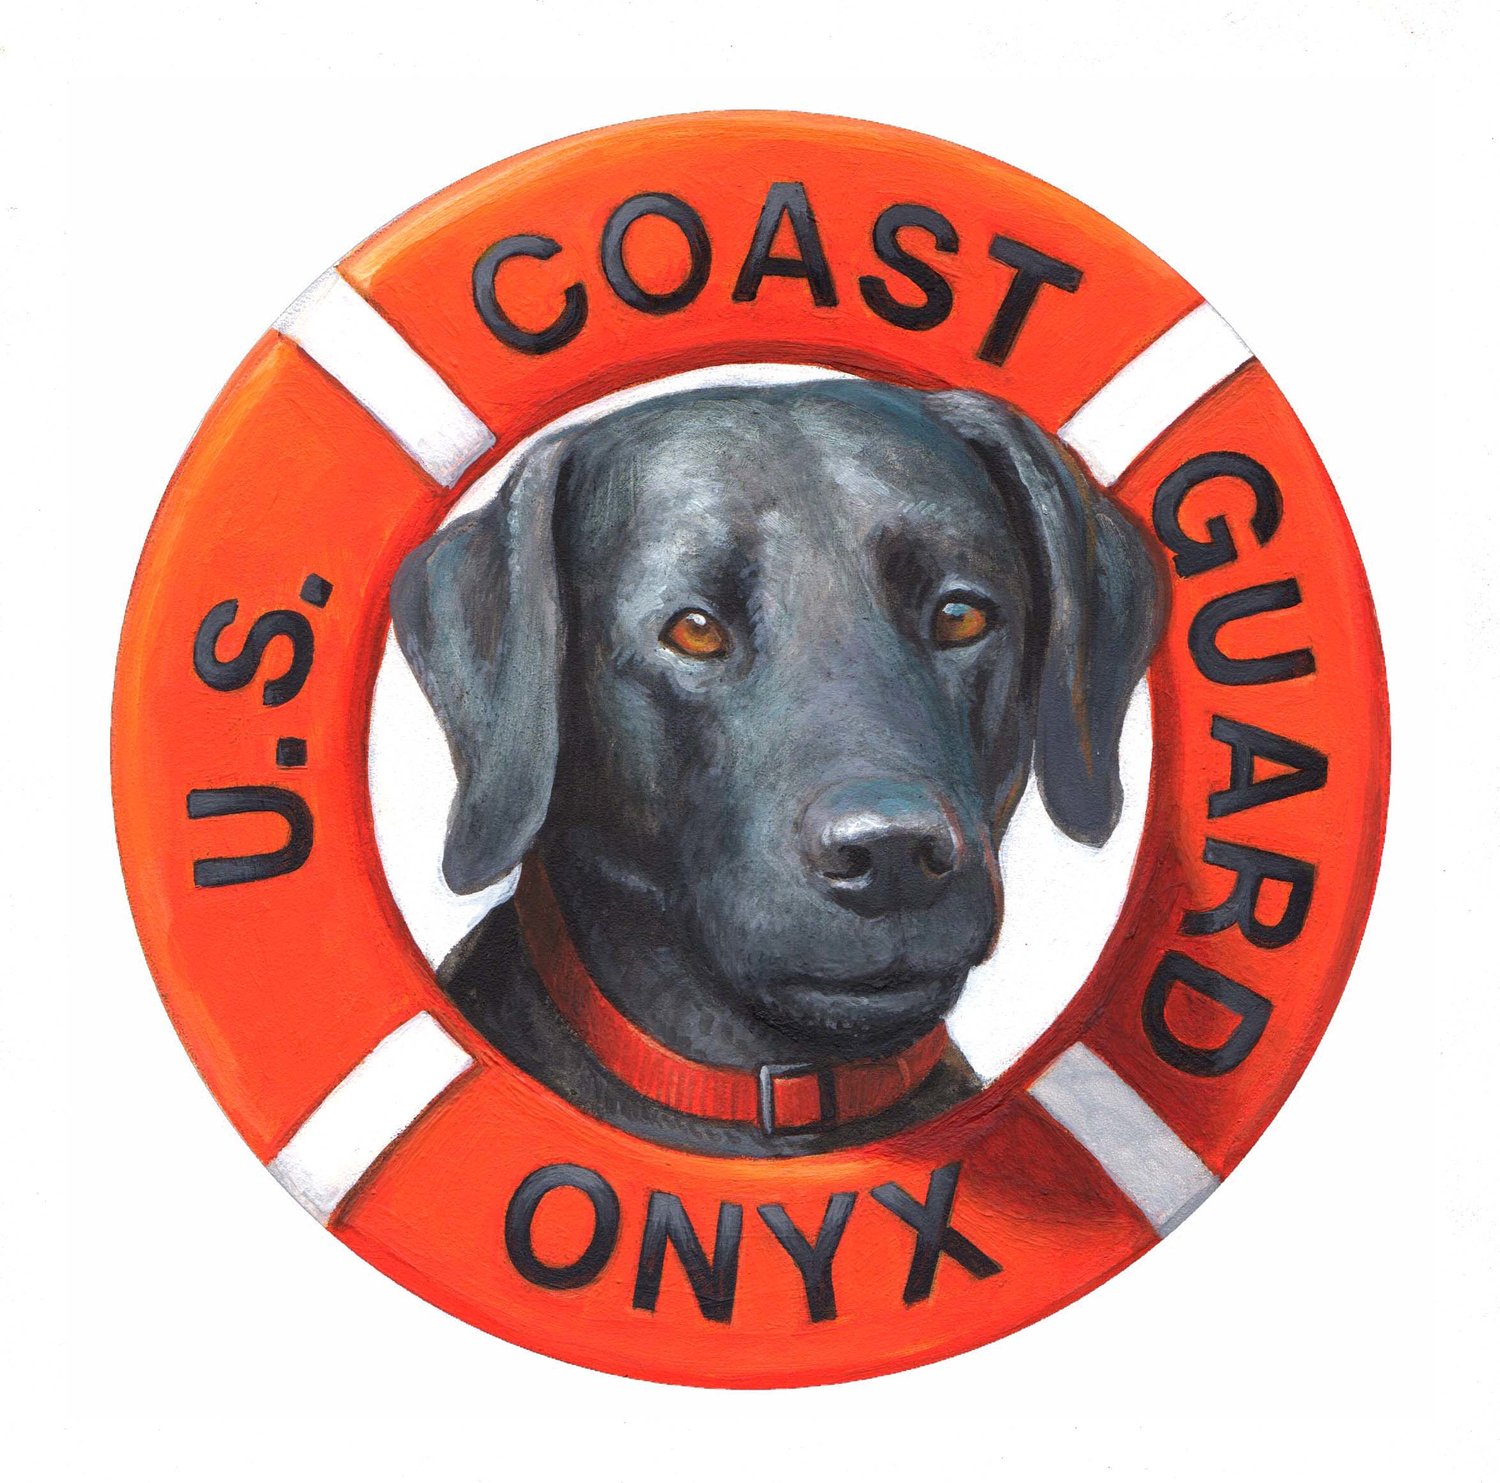 Onyx: A Coast Guard Dog